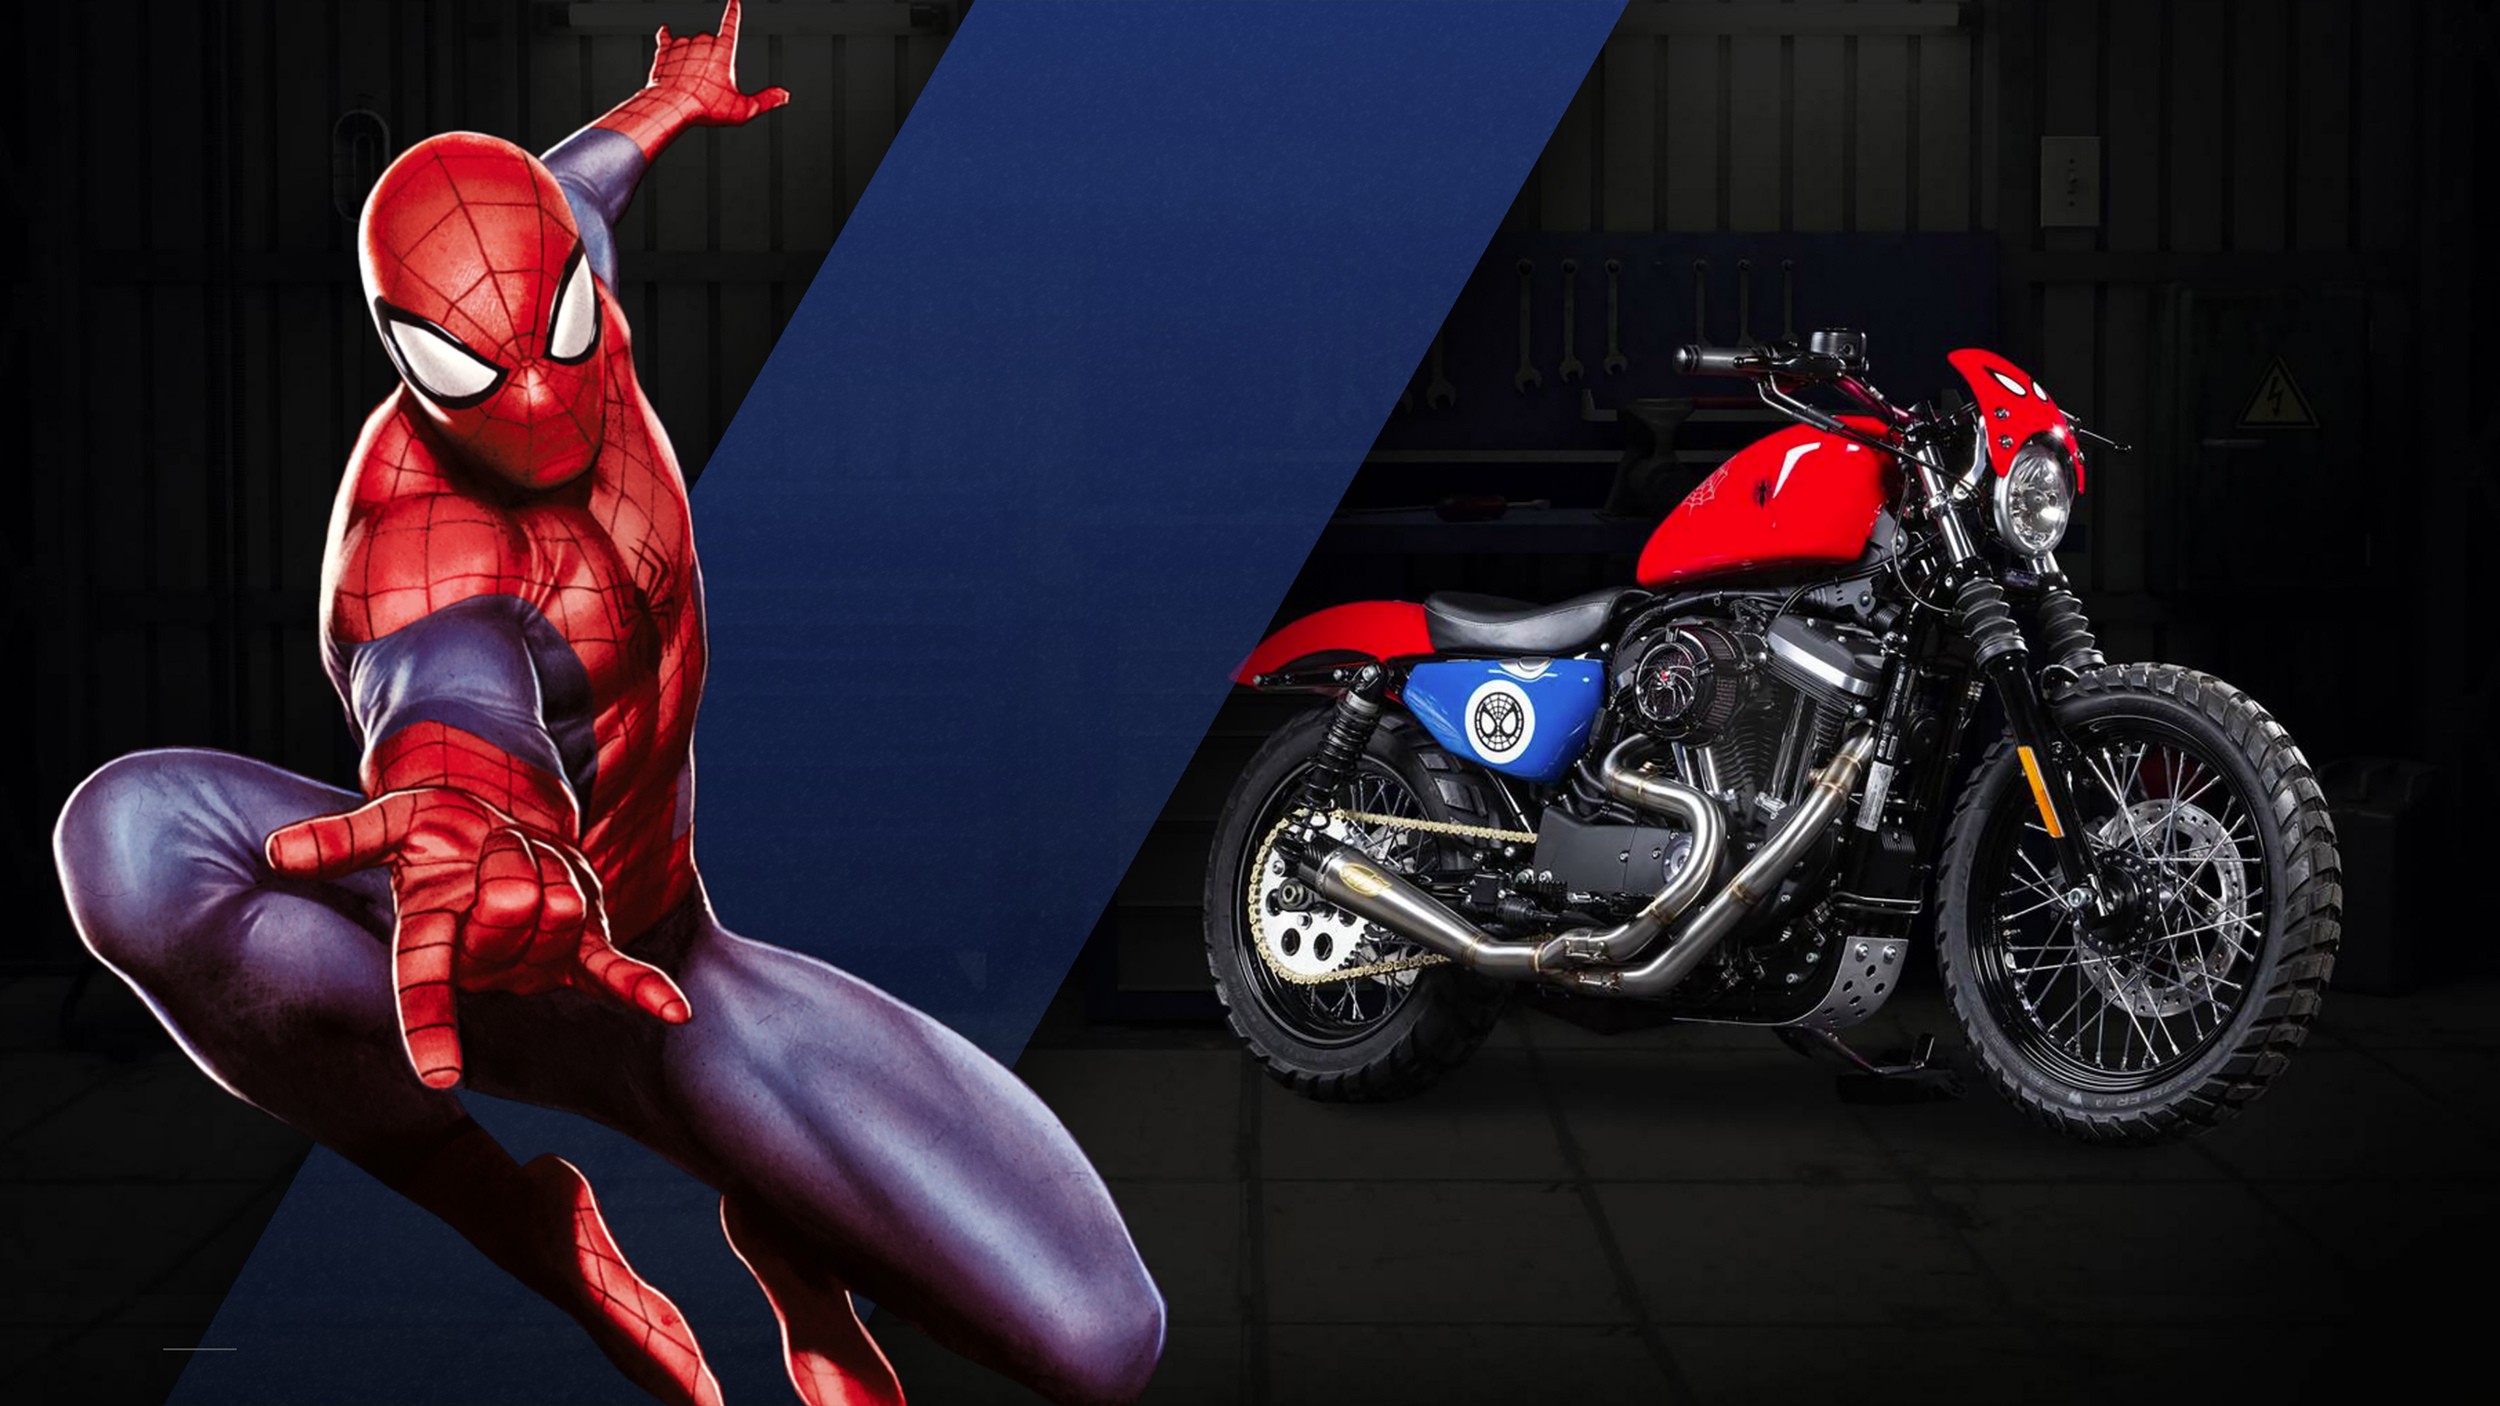 Marvel Superhero Harley Davidson Bikes Surface in The Land 